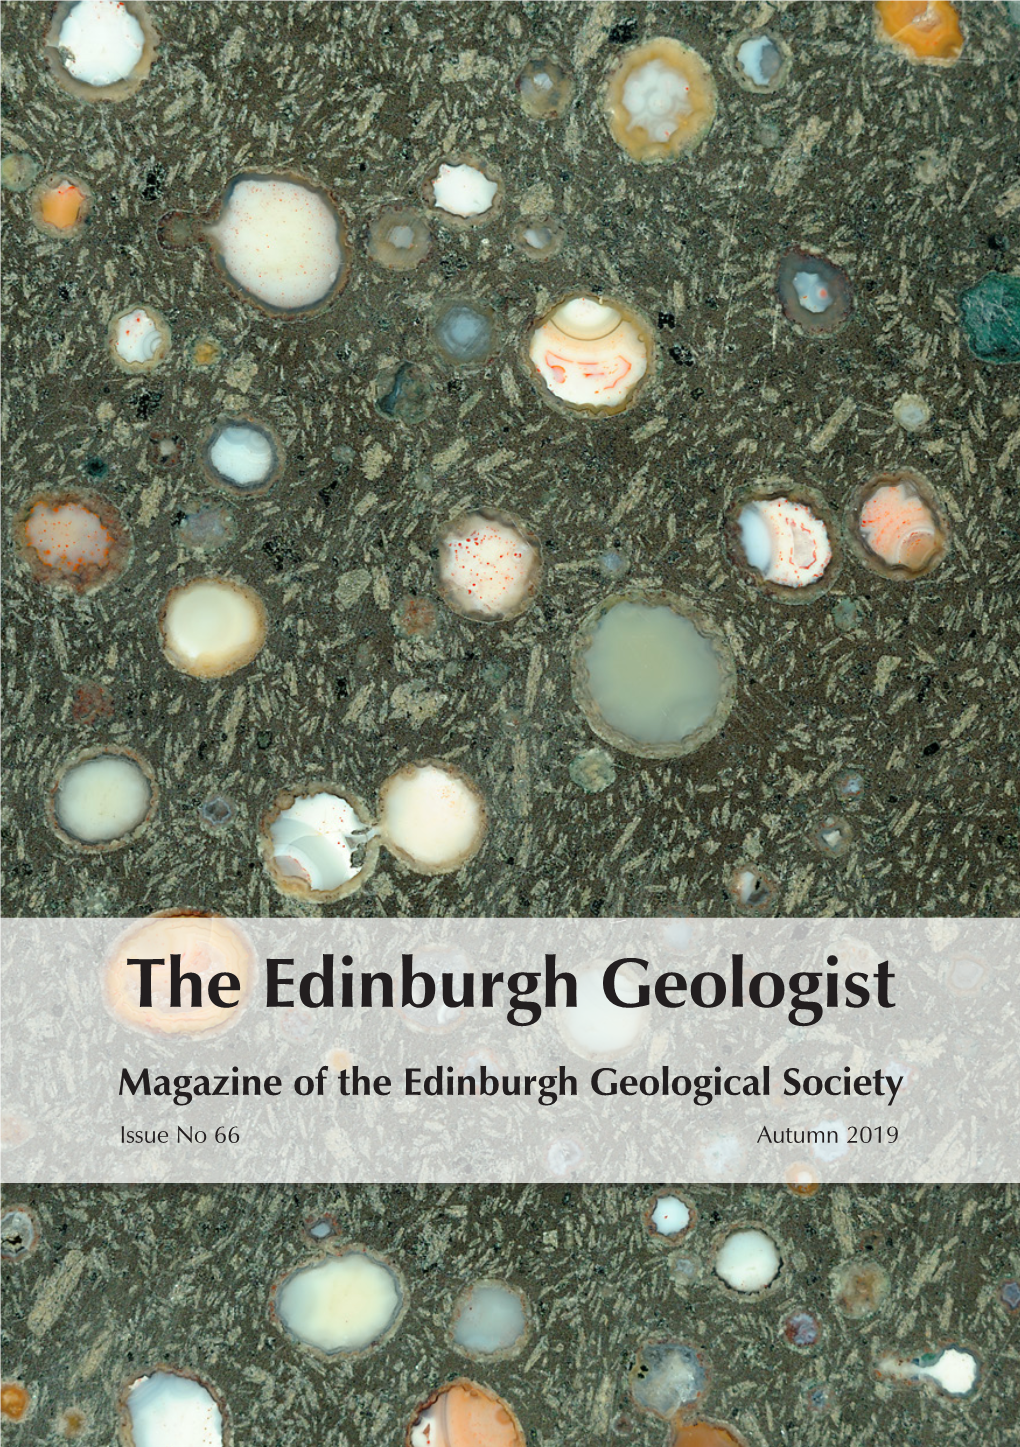 The Edinburgh Geologist